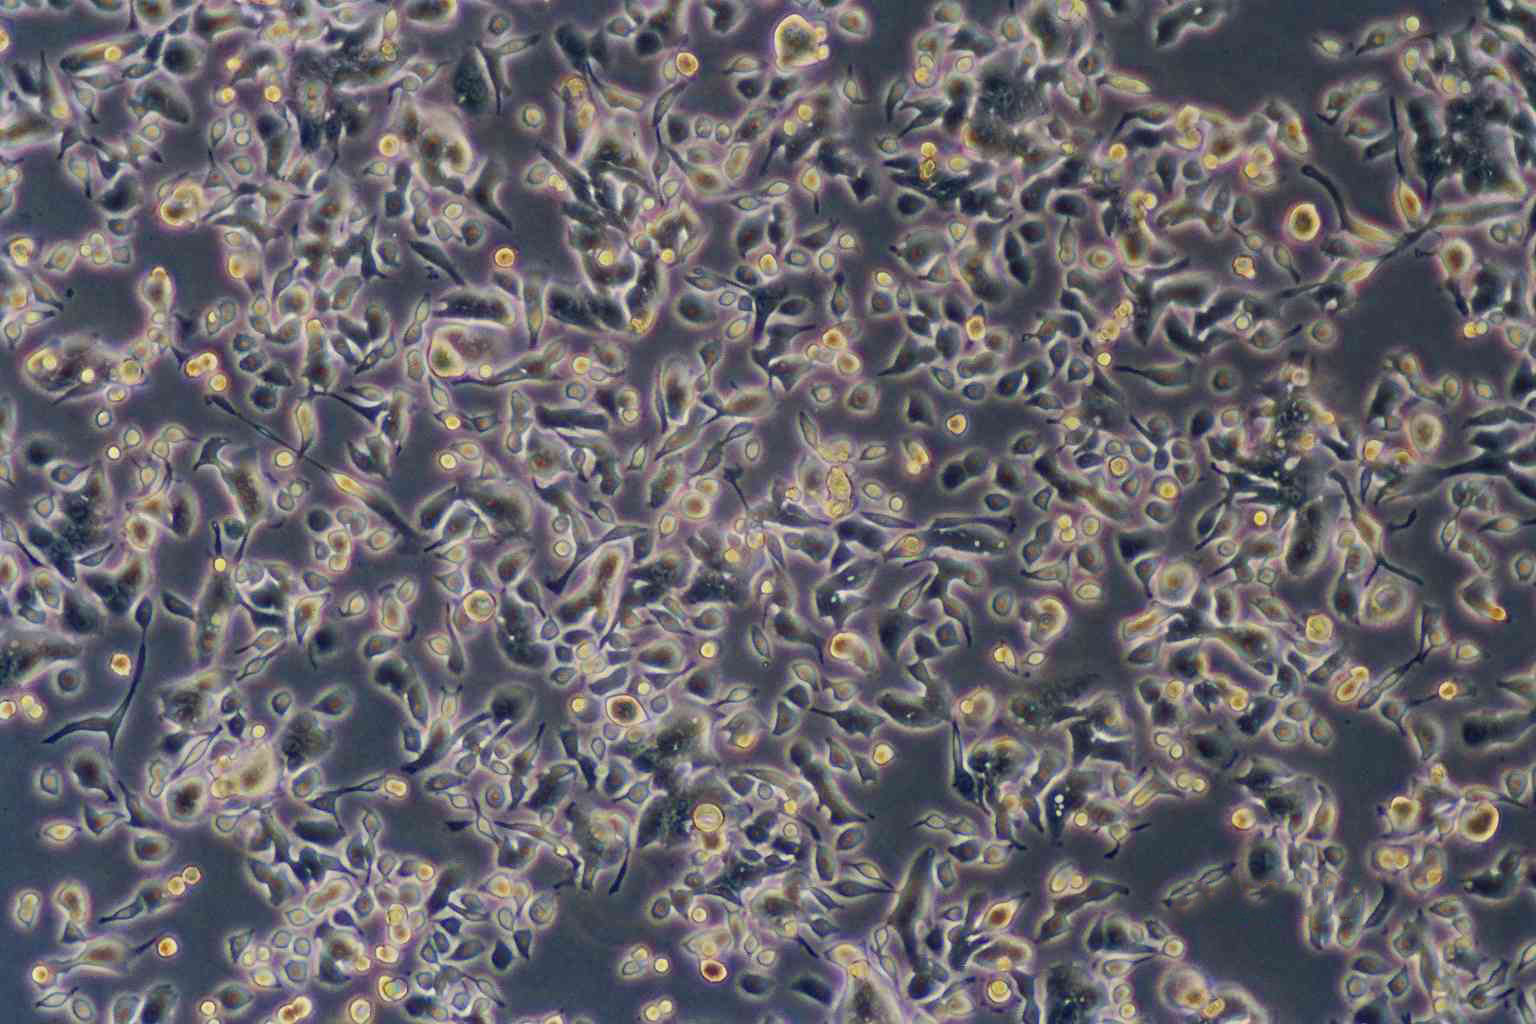 C32 [Human melanoma] Cells(赠送Str鉴定报告)|人黑色素瘤细胞,C32 [Human melanoma] Cells